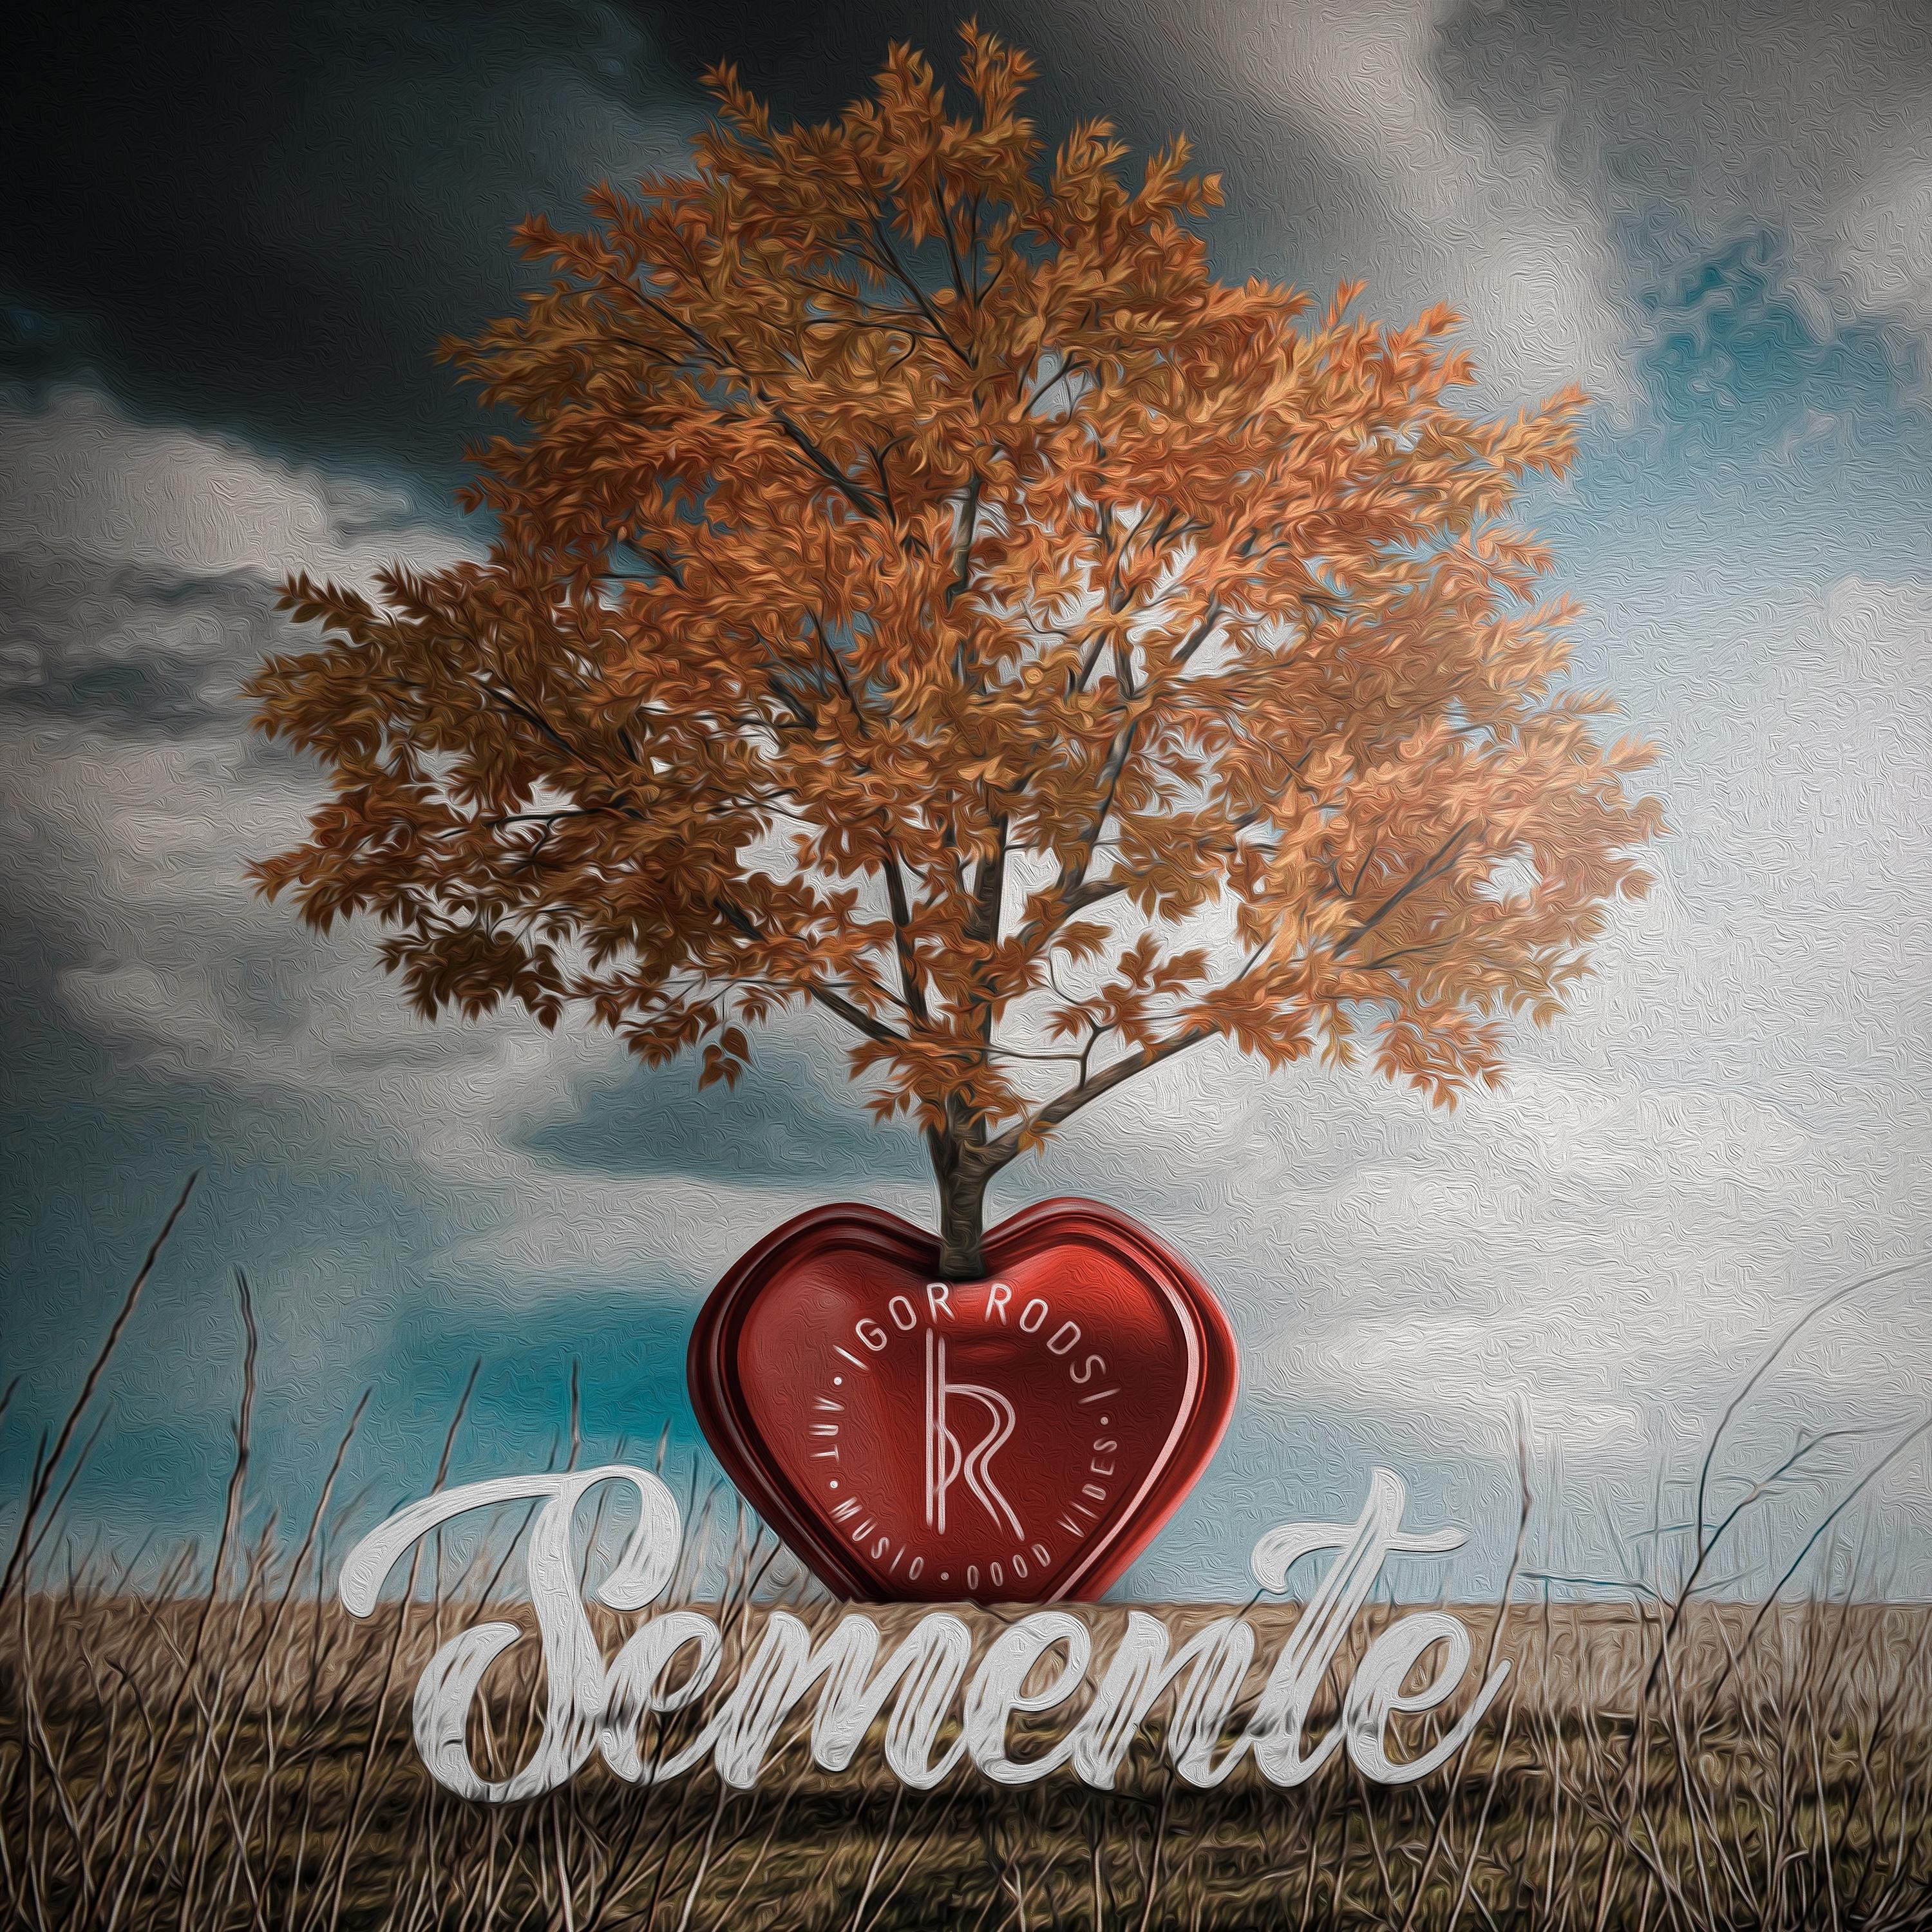 Постер альбома Semente